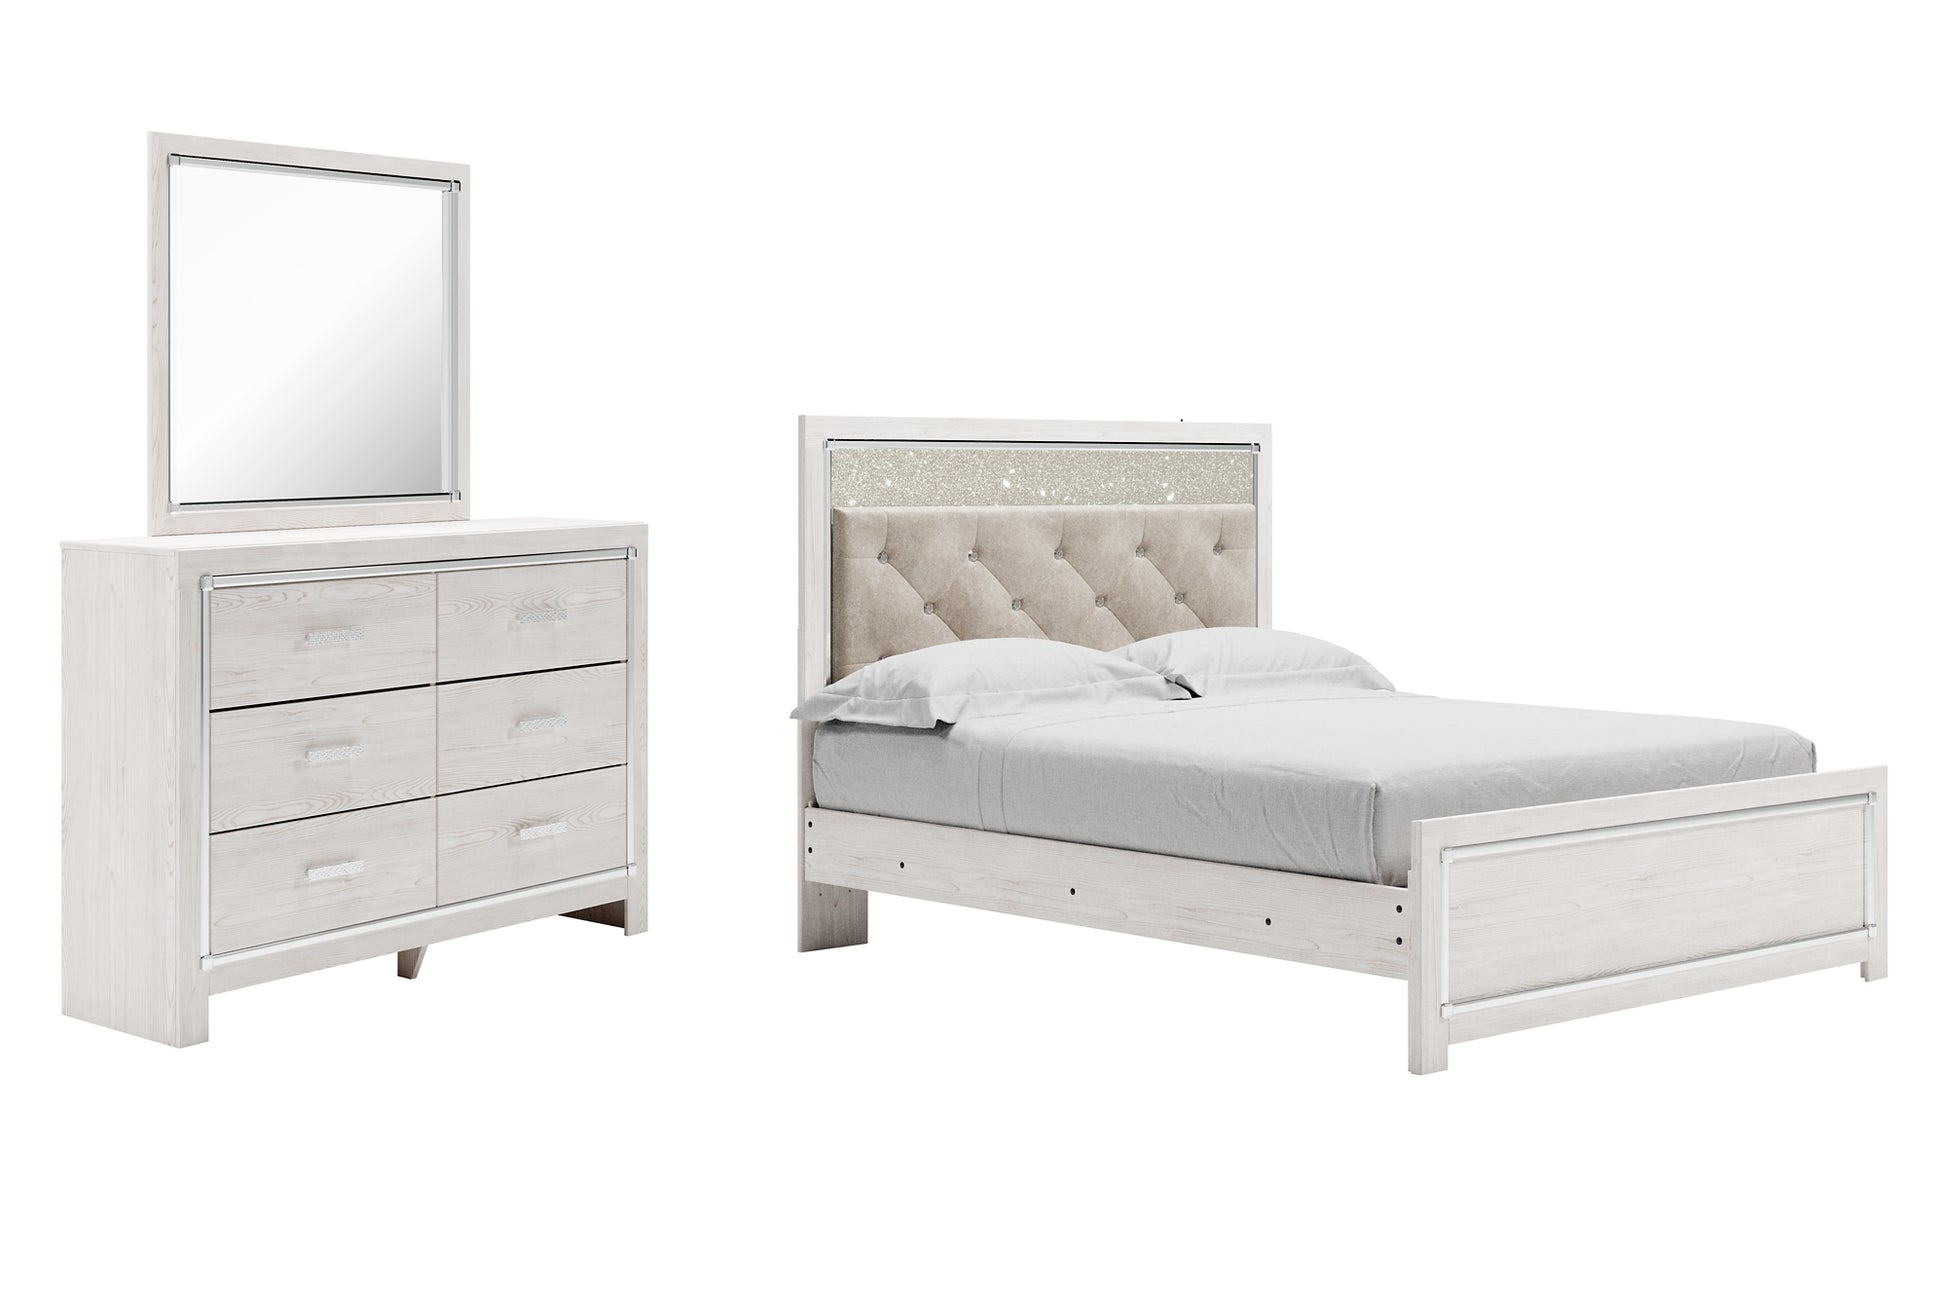 Altyra Queen Panel Bed with Mirrored Dresser Wilson Furniture (OH)  in Bridgeport, Ohio. Serving Bridgeport, Yorkville, Bellaire, & Avondale